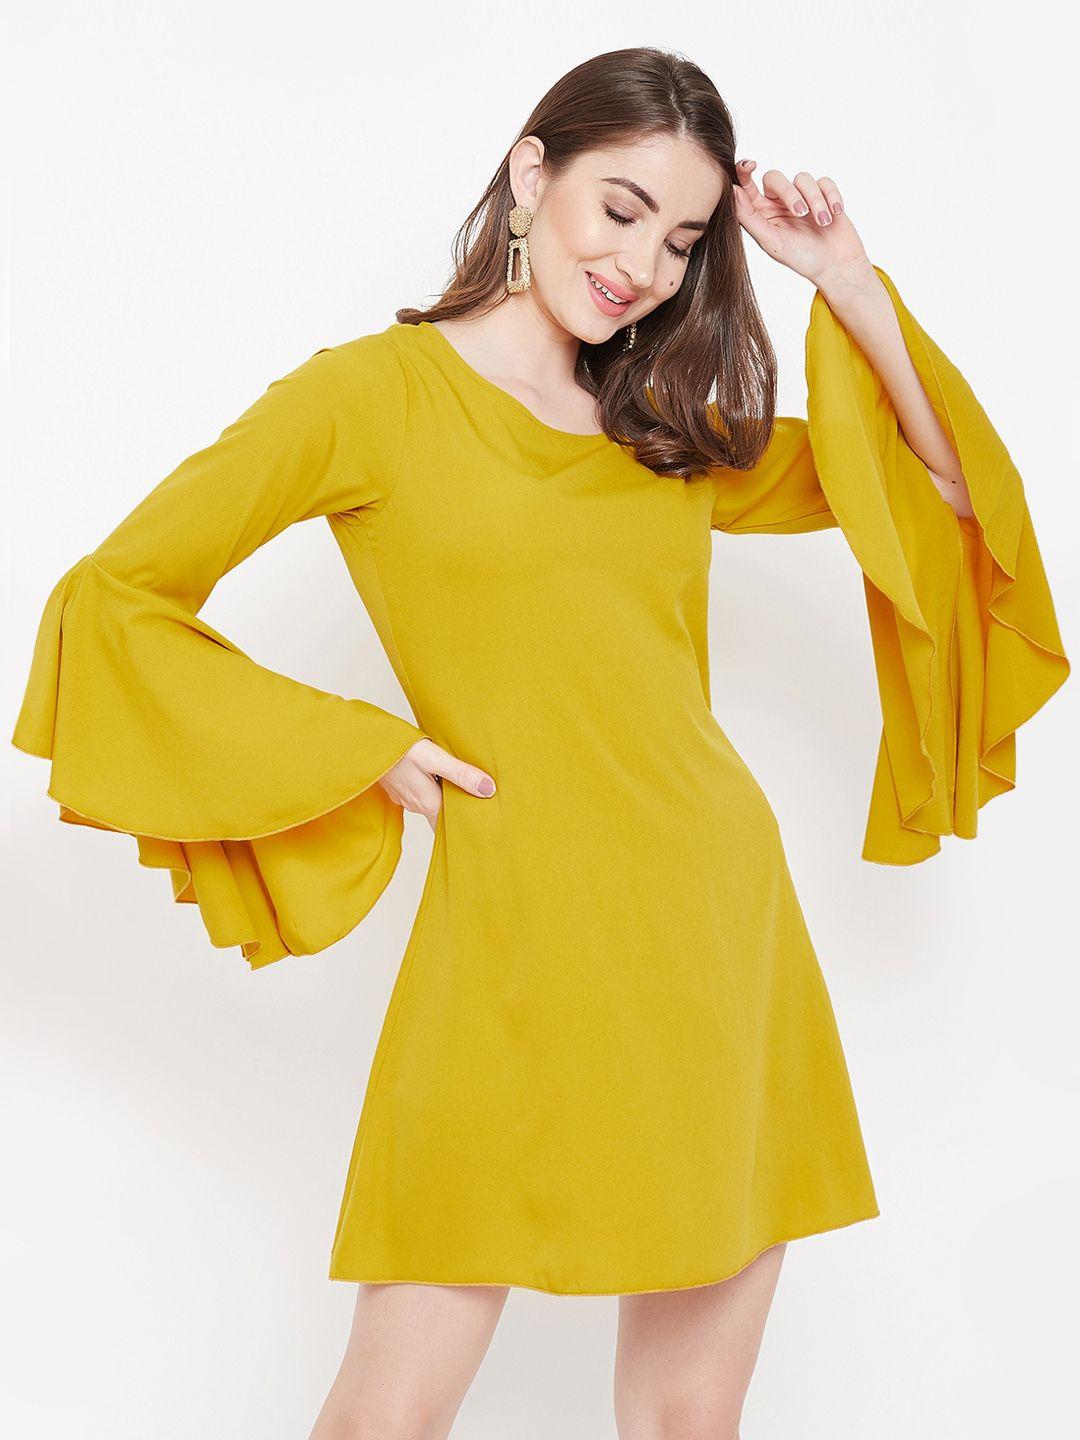 berrylush women mustard yellow solid peplum sleeve fit and flare dress